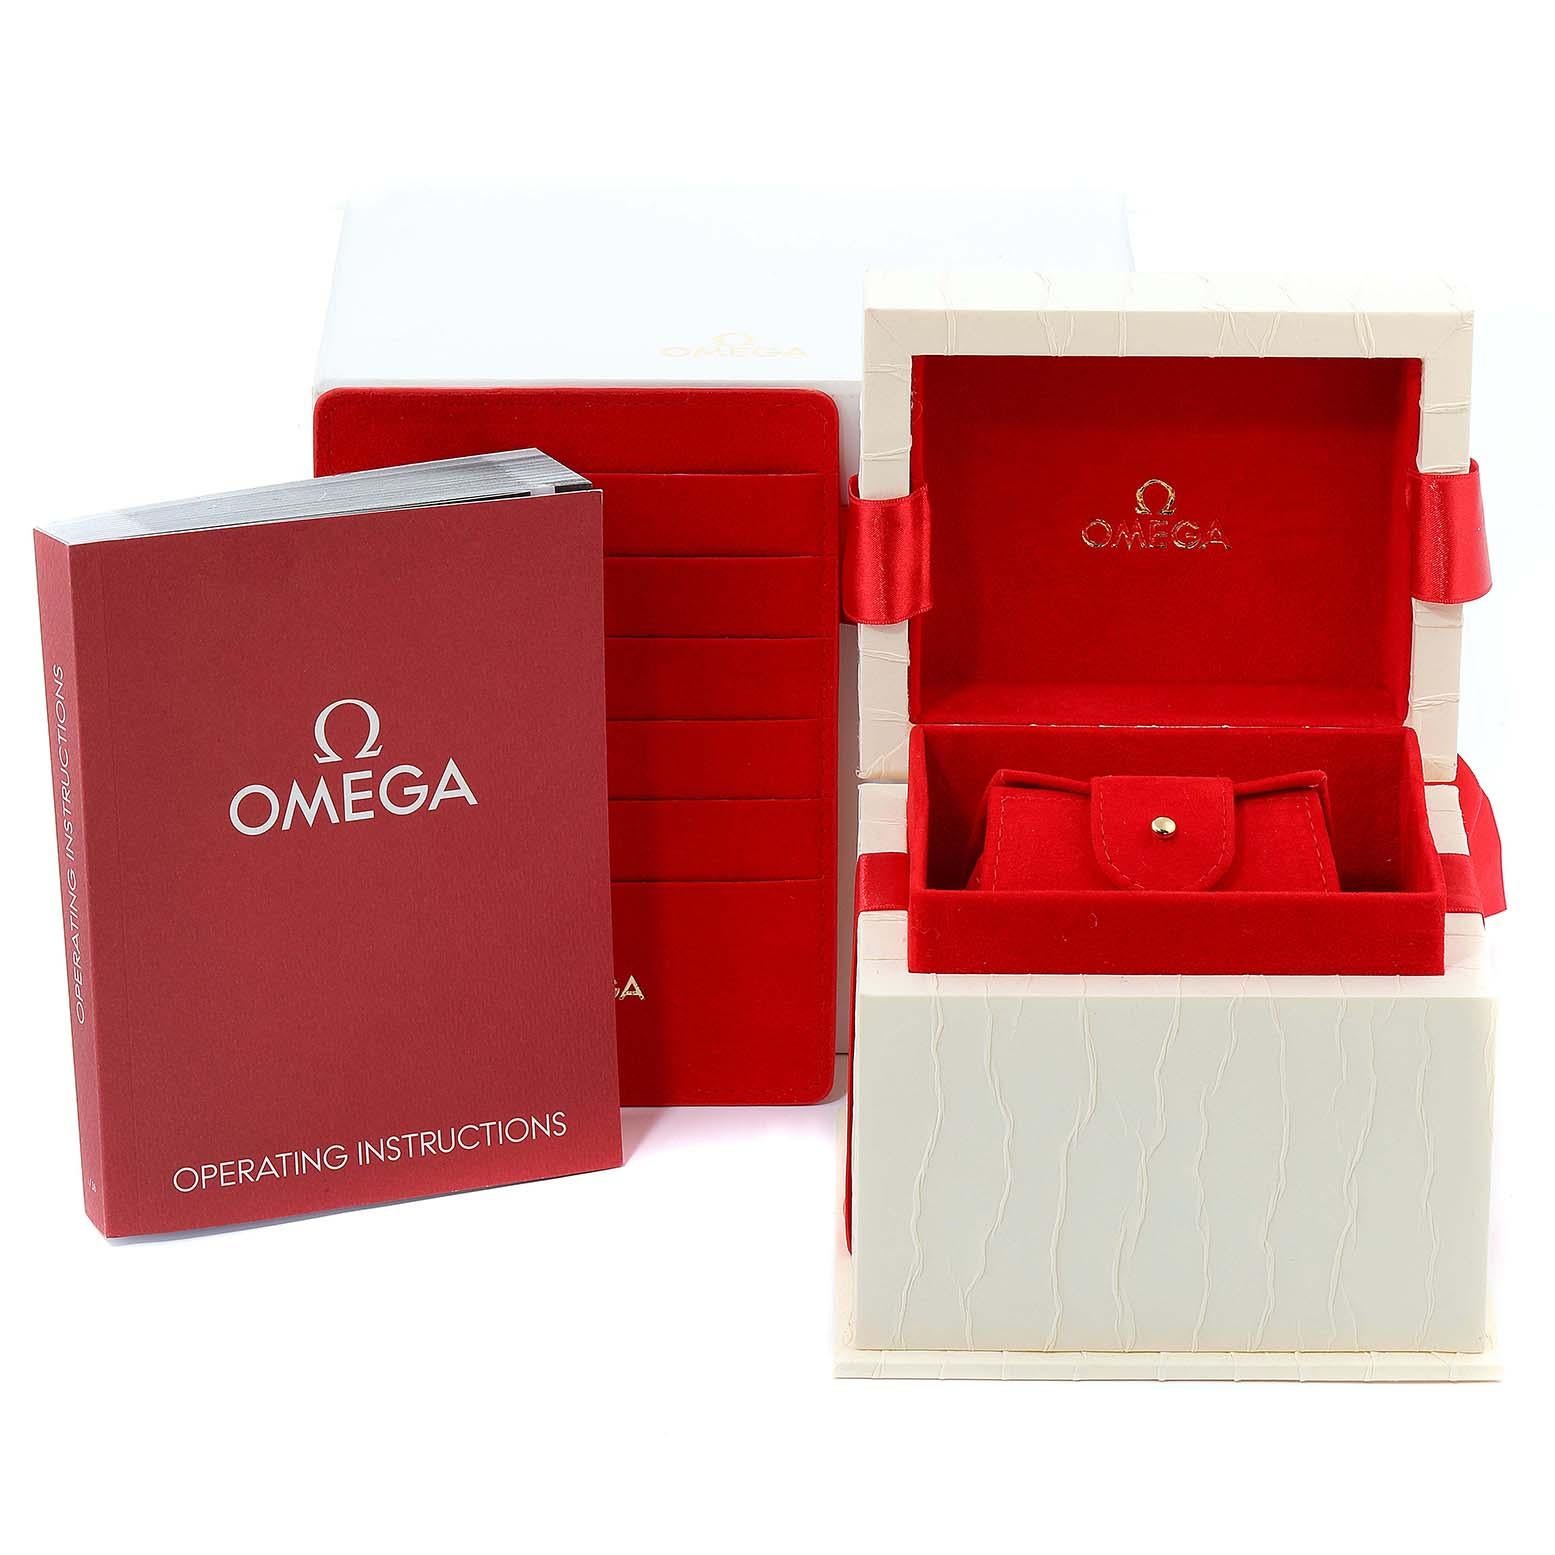 Omega Constellation Diamond Ladies Watch 123.15.24.60.52.001 For Sale 3